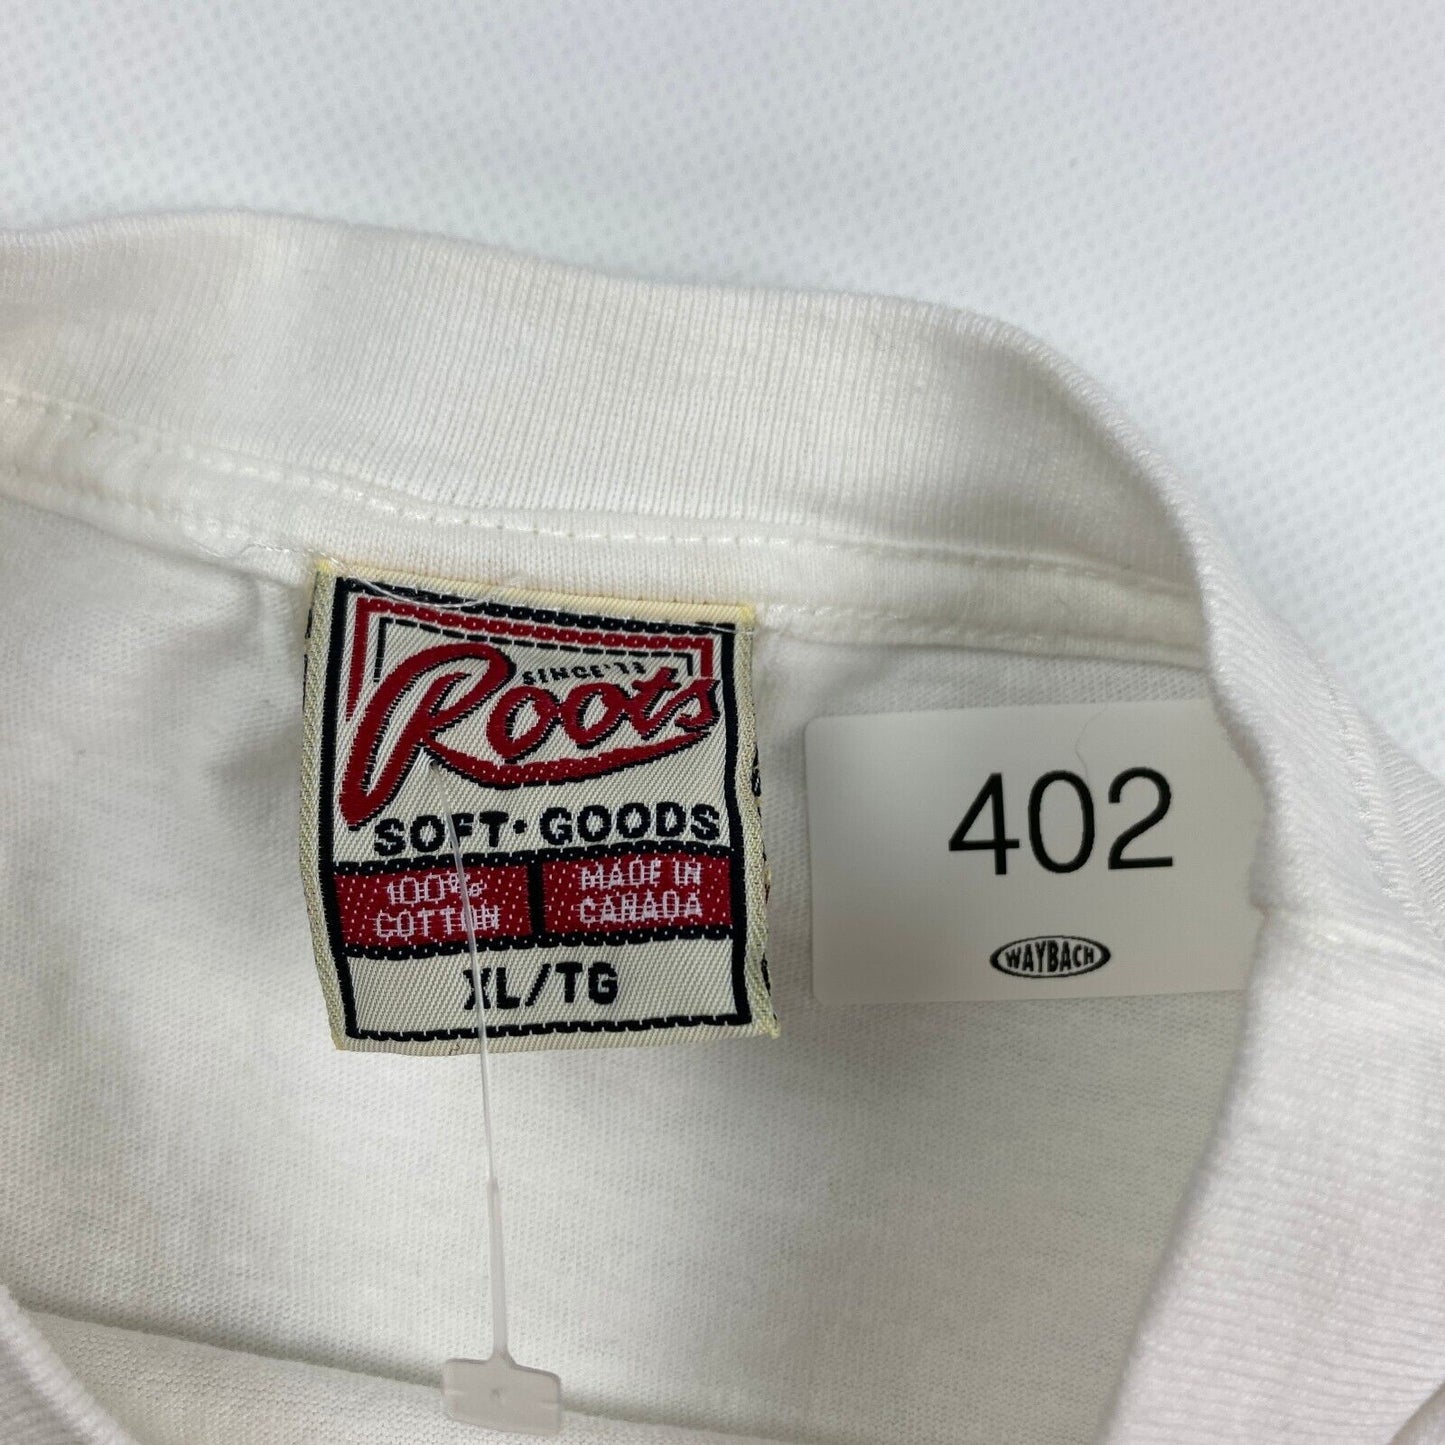 VINTAGE 1993 Made In America Warner Bros Roots White T-Shirt sz XL Men